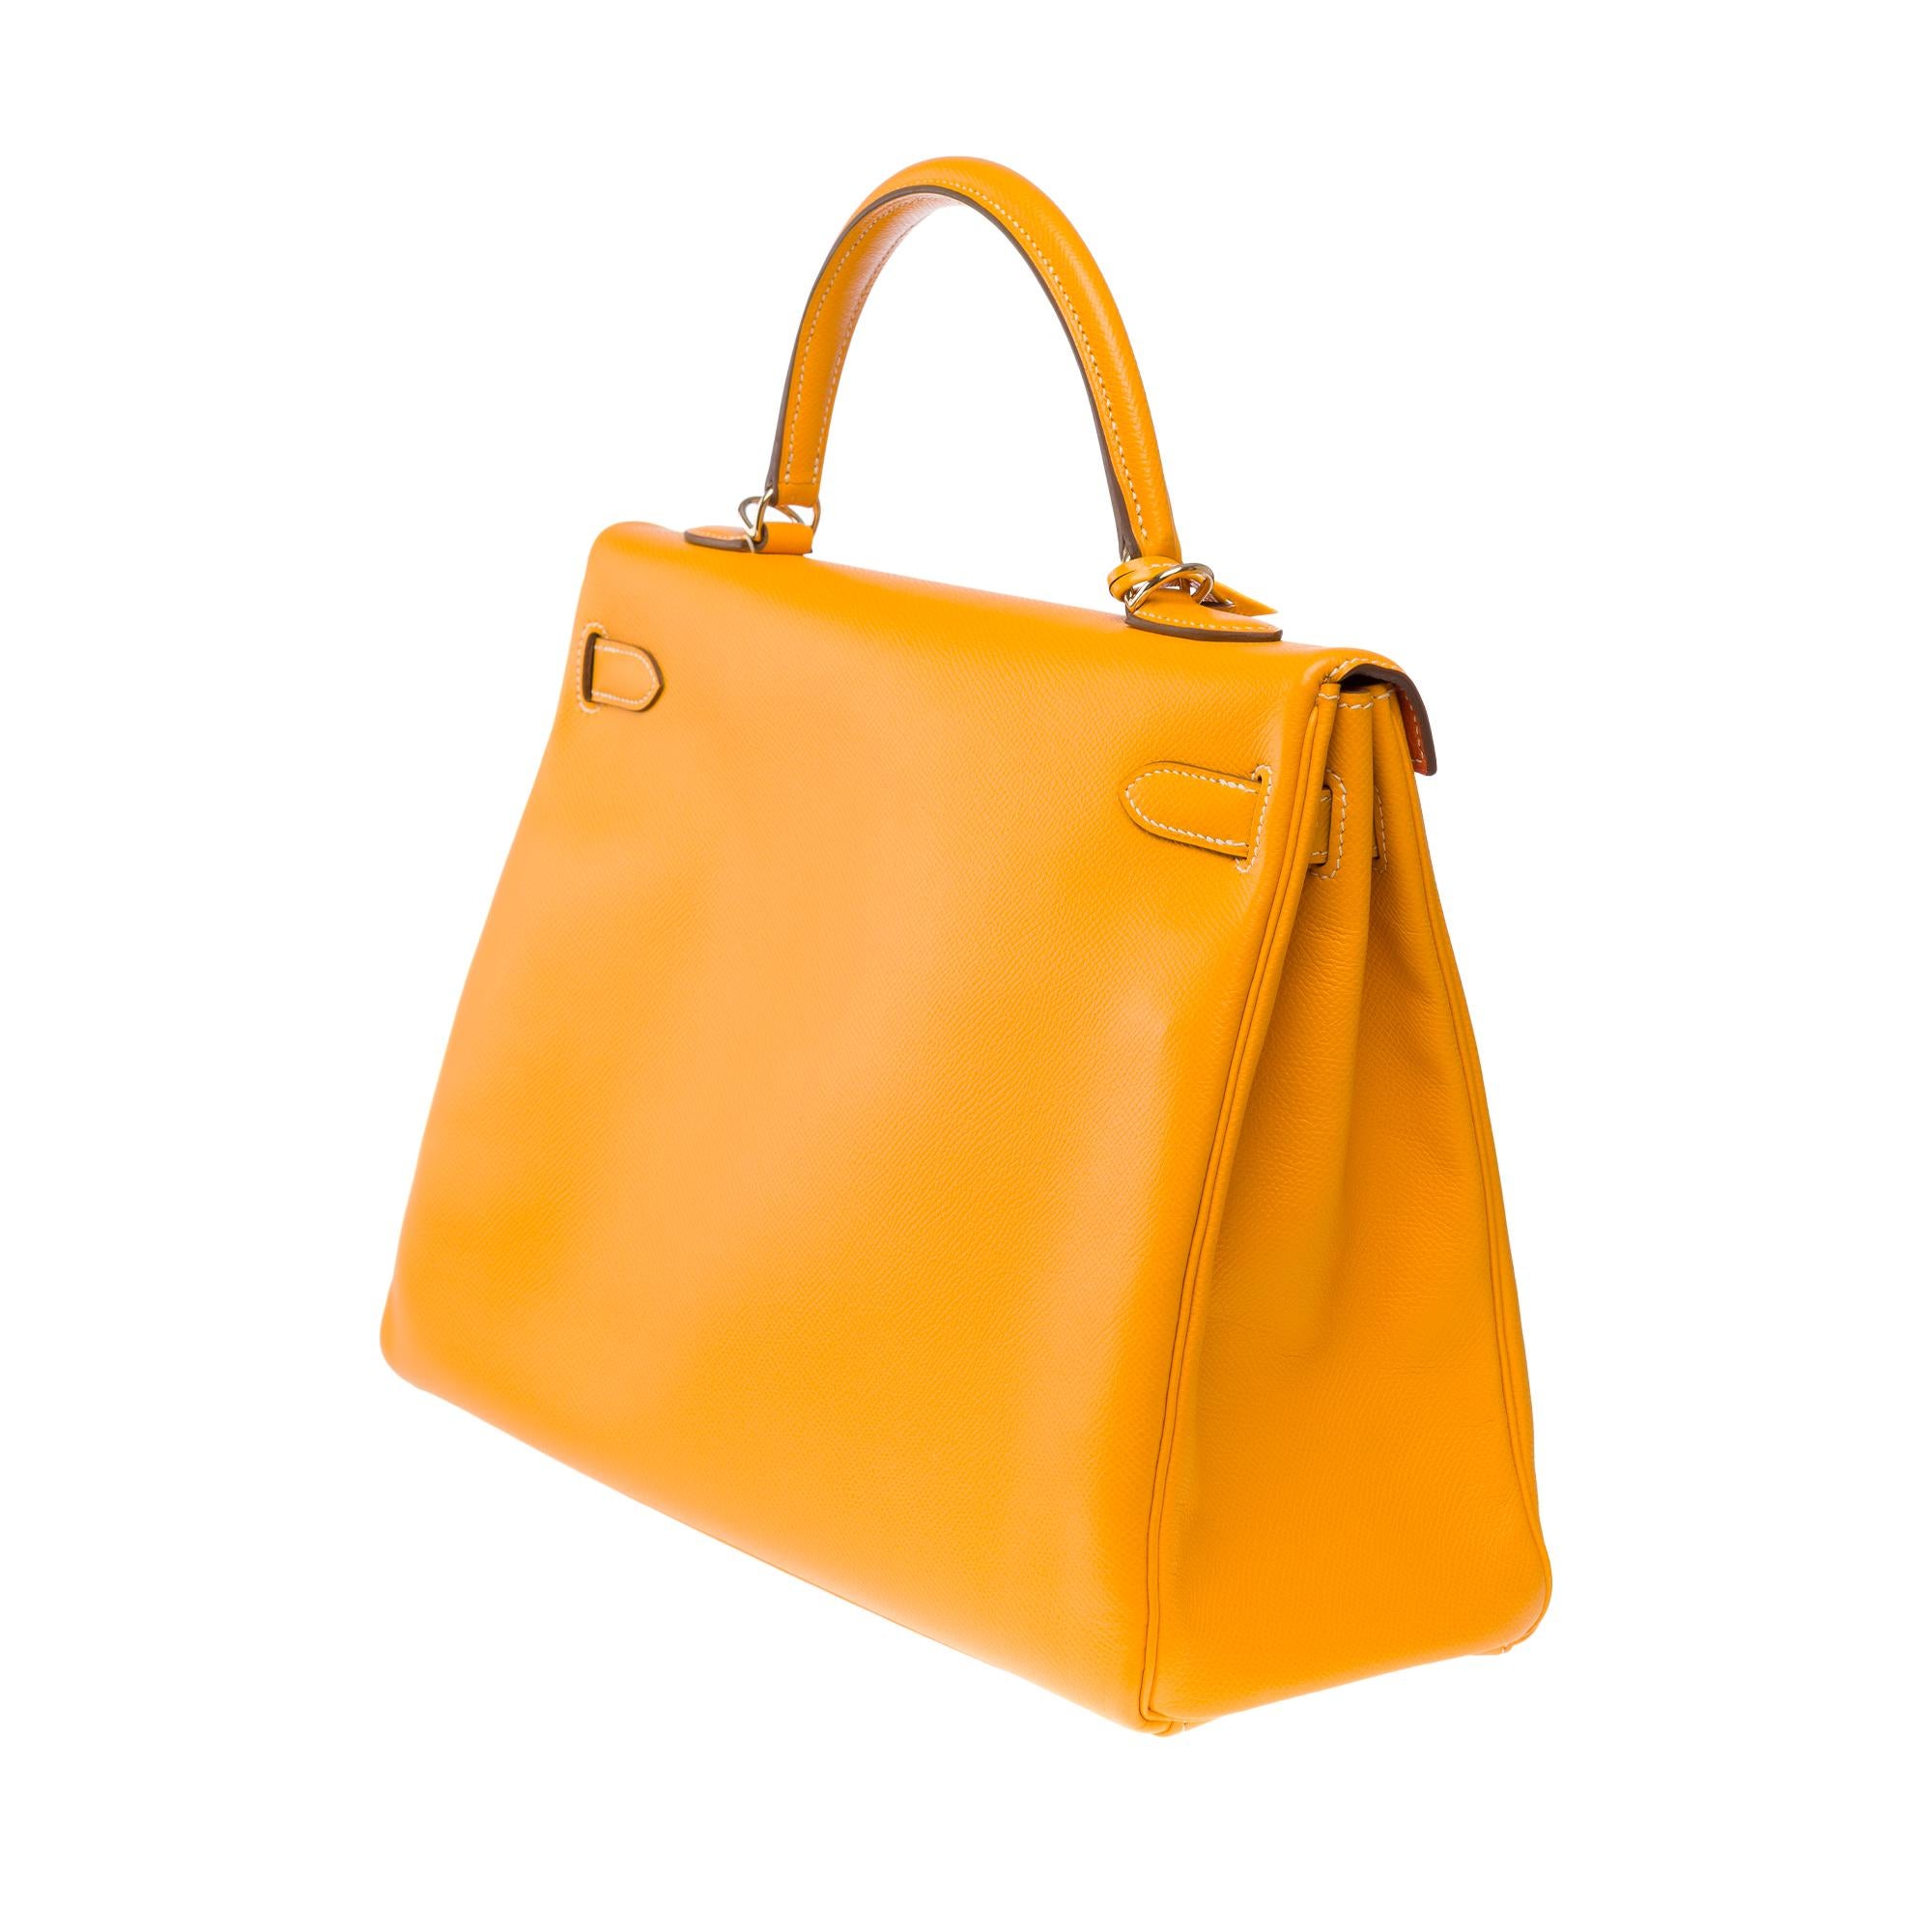 Candy Limited Edition Hermès Kelly 35 handbag strap in Yellow Epsom leather, GHW 2